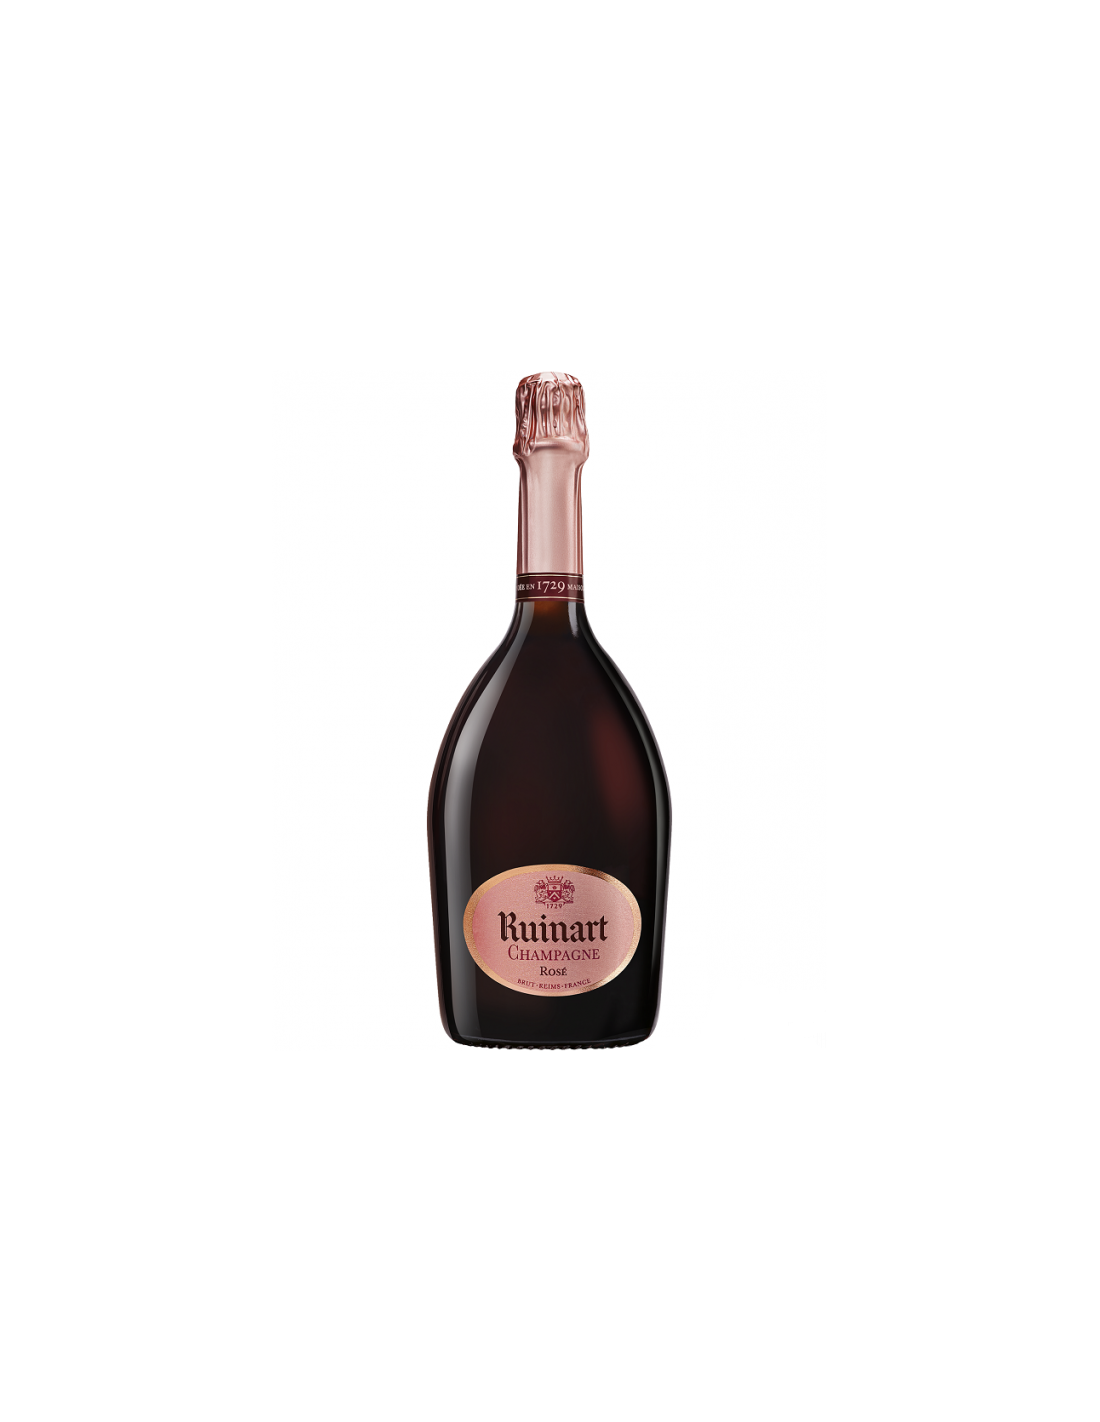 Sampanie roze Ruinart, 0.75L, 12.5% alc., Franta alcooldiscount.ro